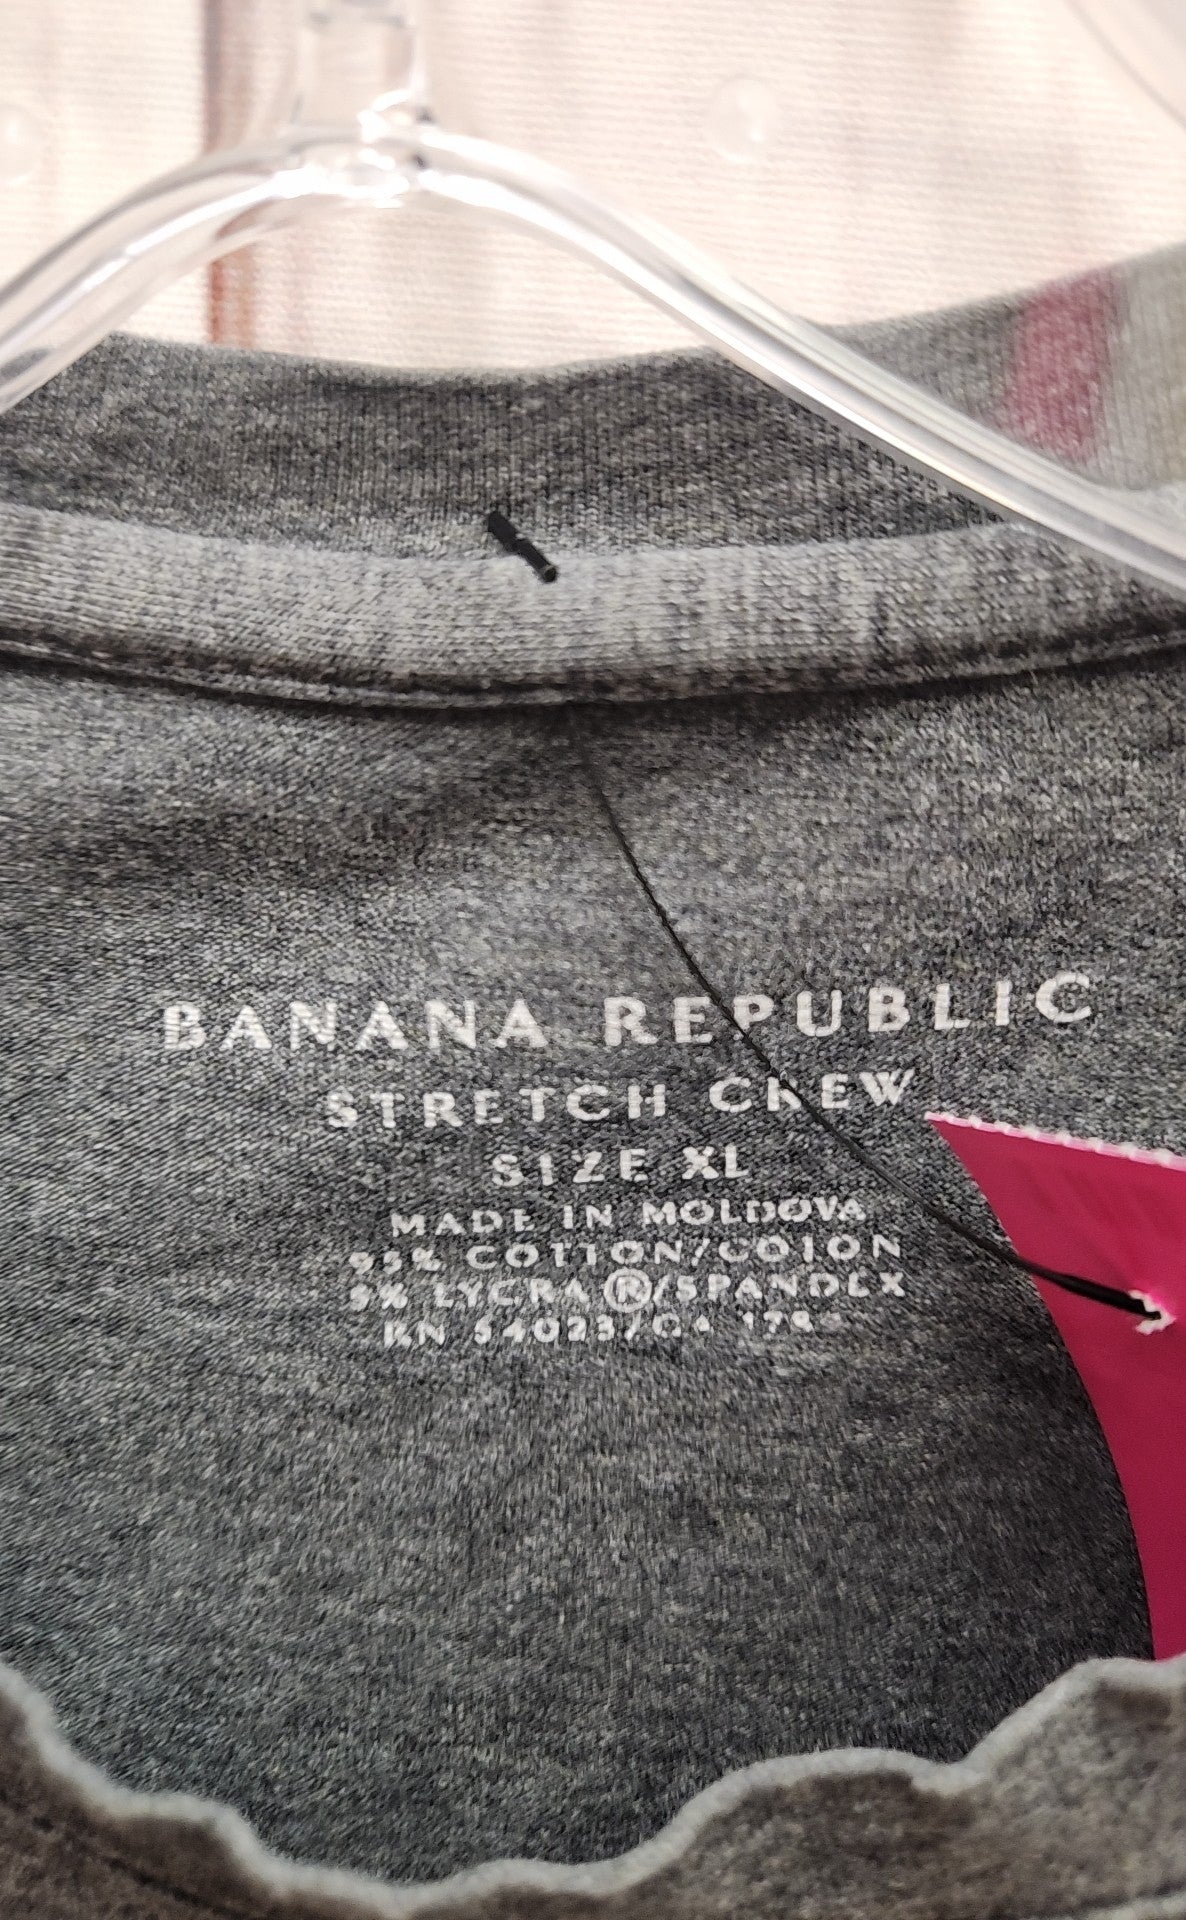 Banana Republic Men's Size XL Gray Shirt